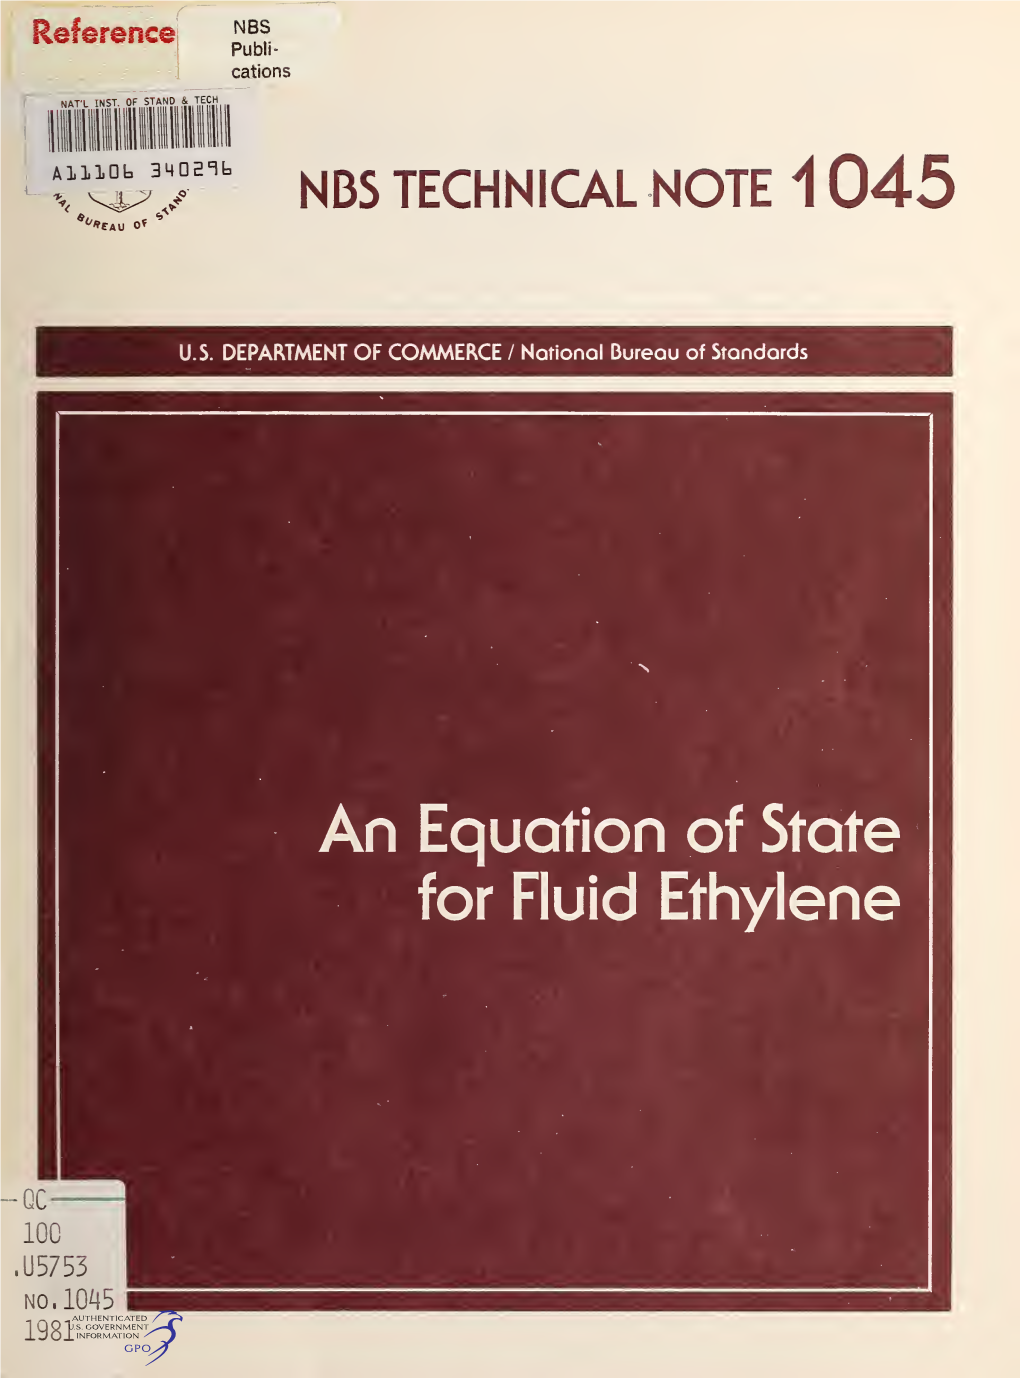 An Equation of State for Fluid Ethylene